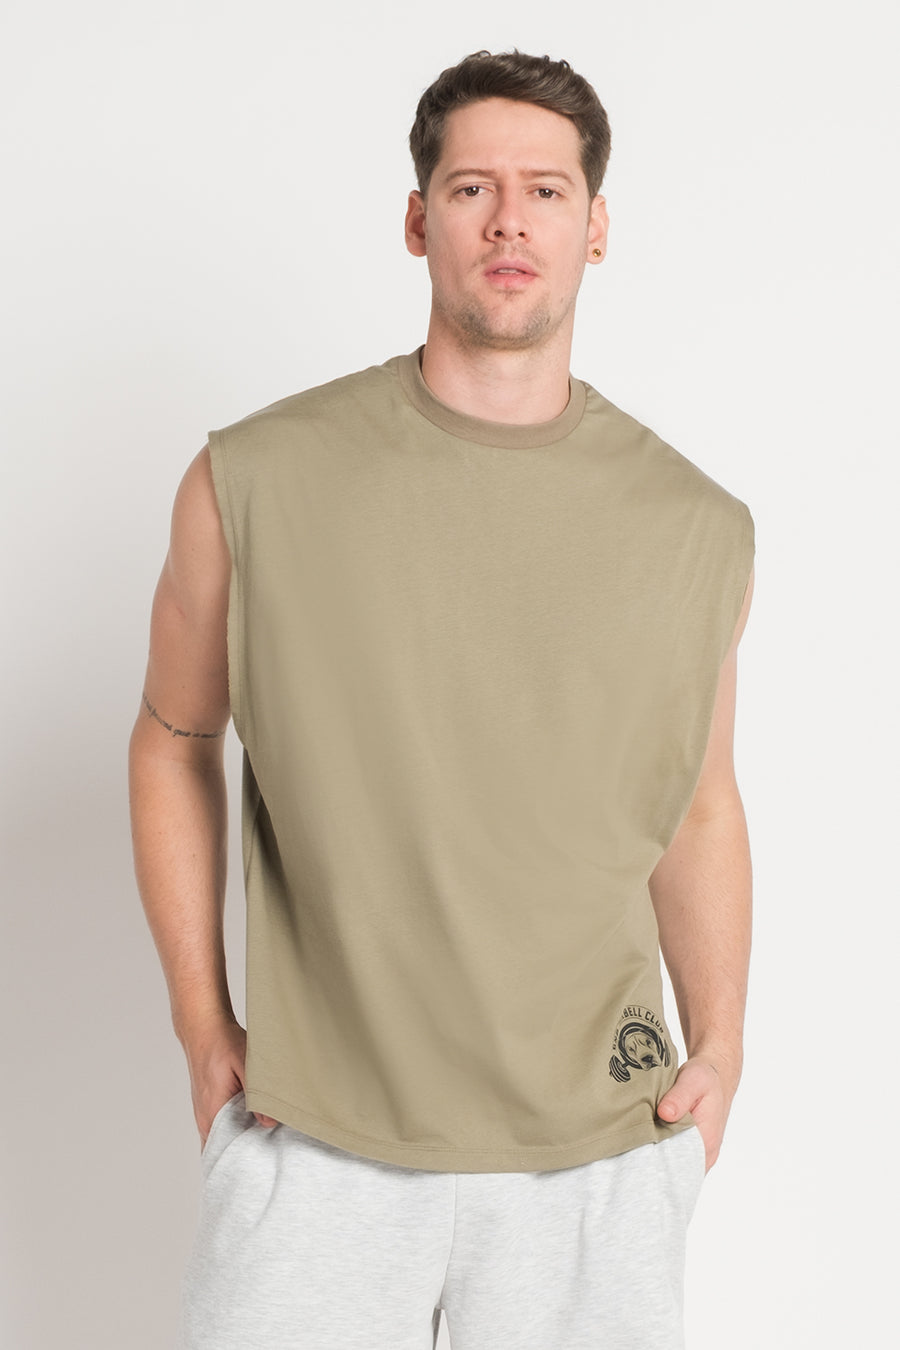 Barbell Club Khaki Sleeveless T-Shirt